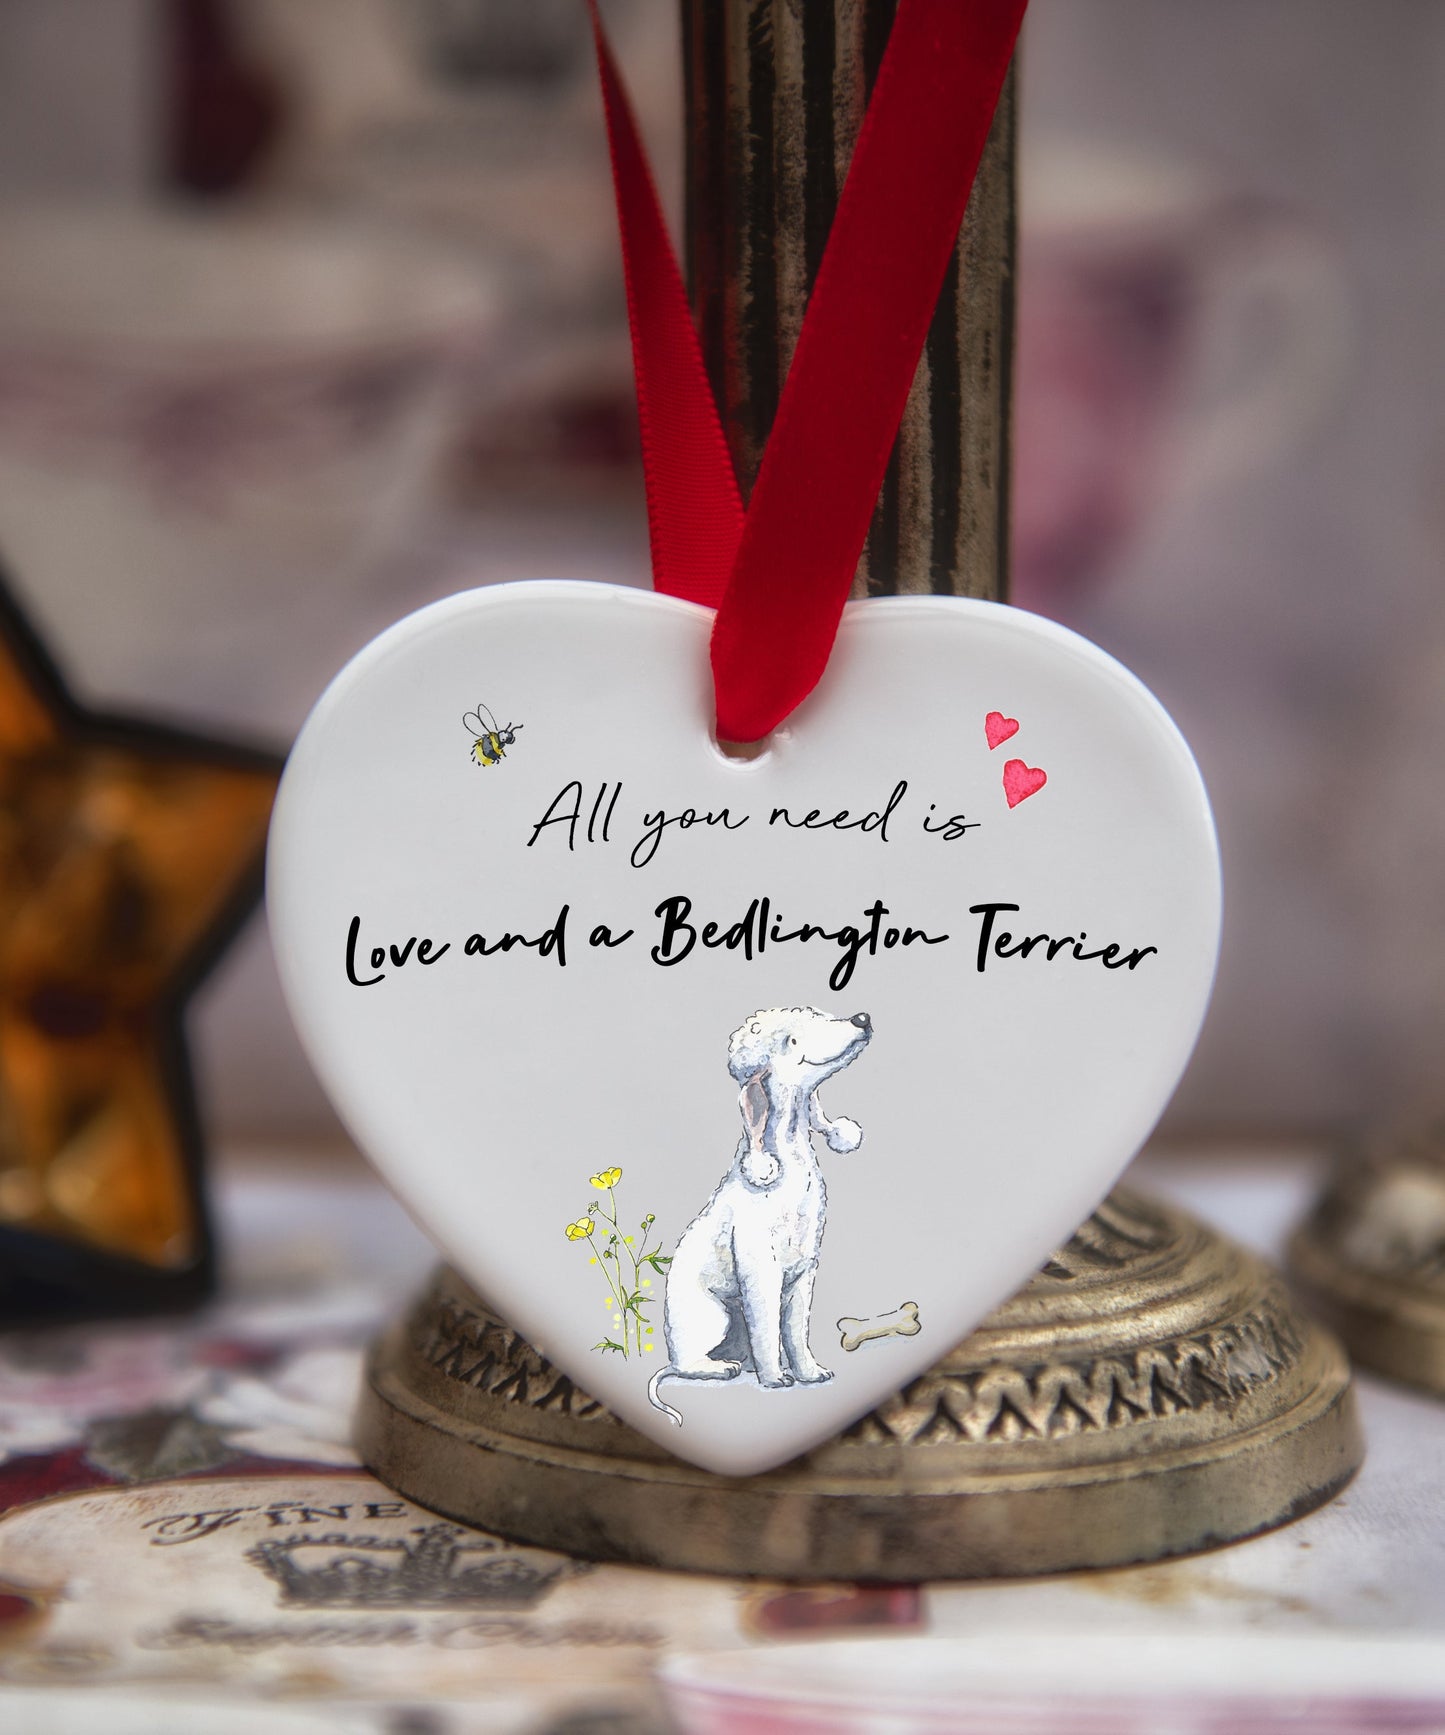 Love and a Bedlington Terrier Ceramic Heart